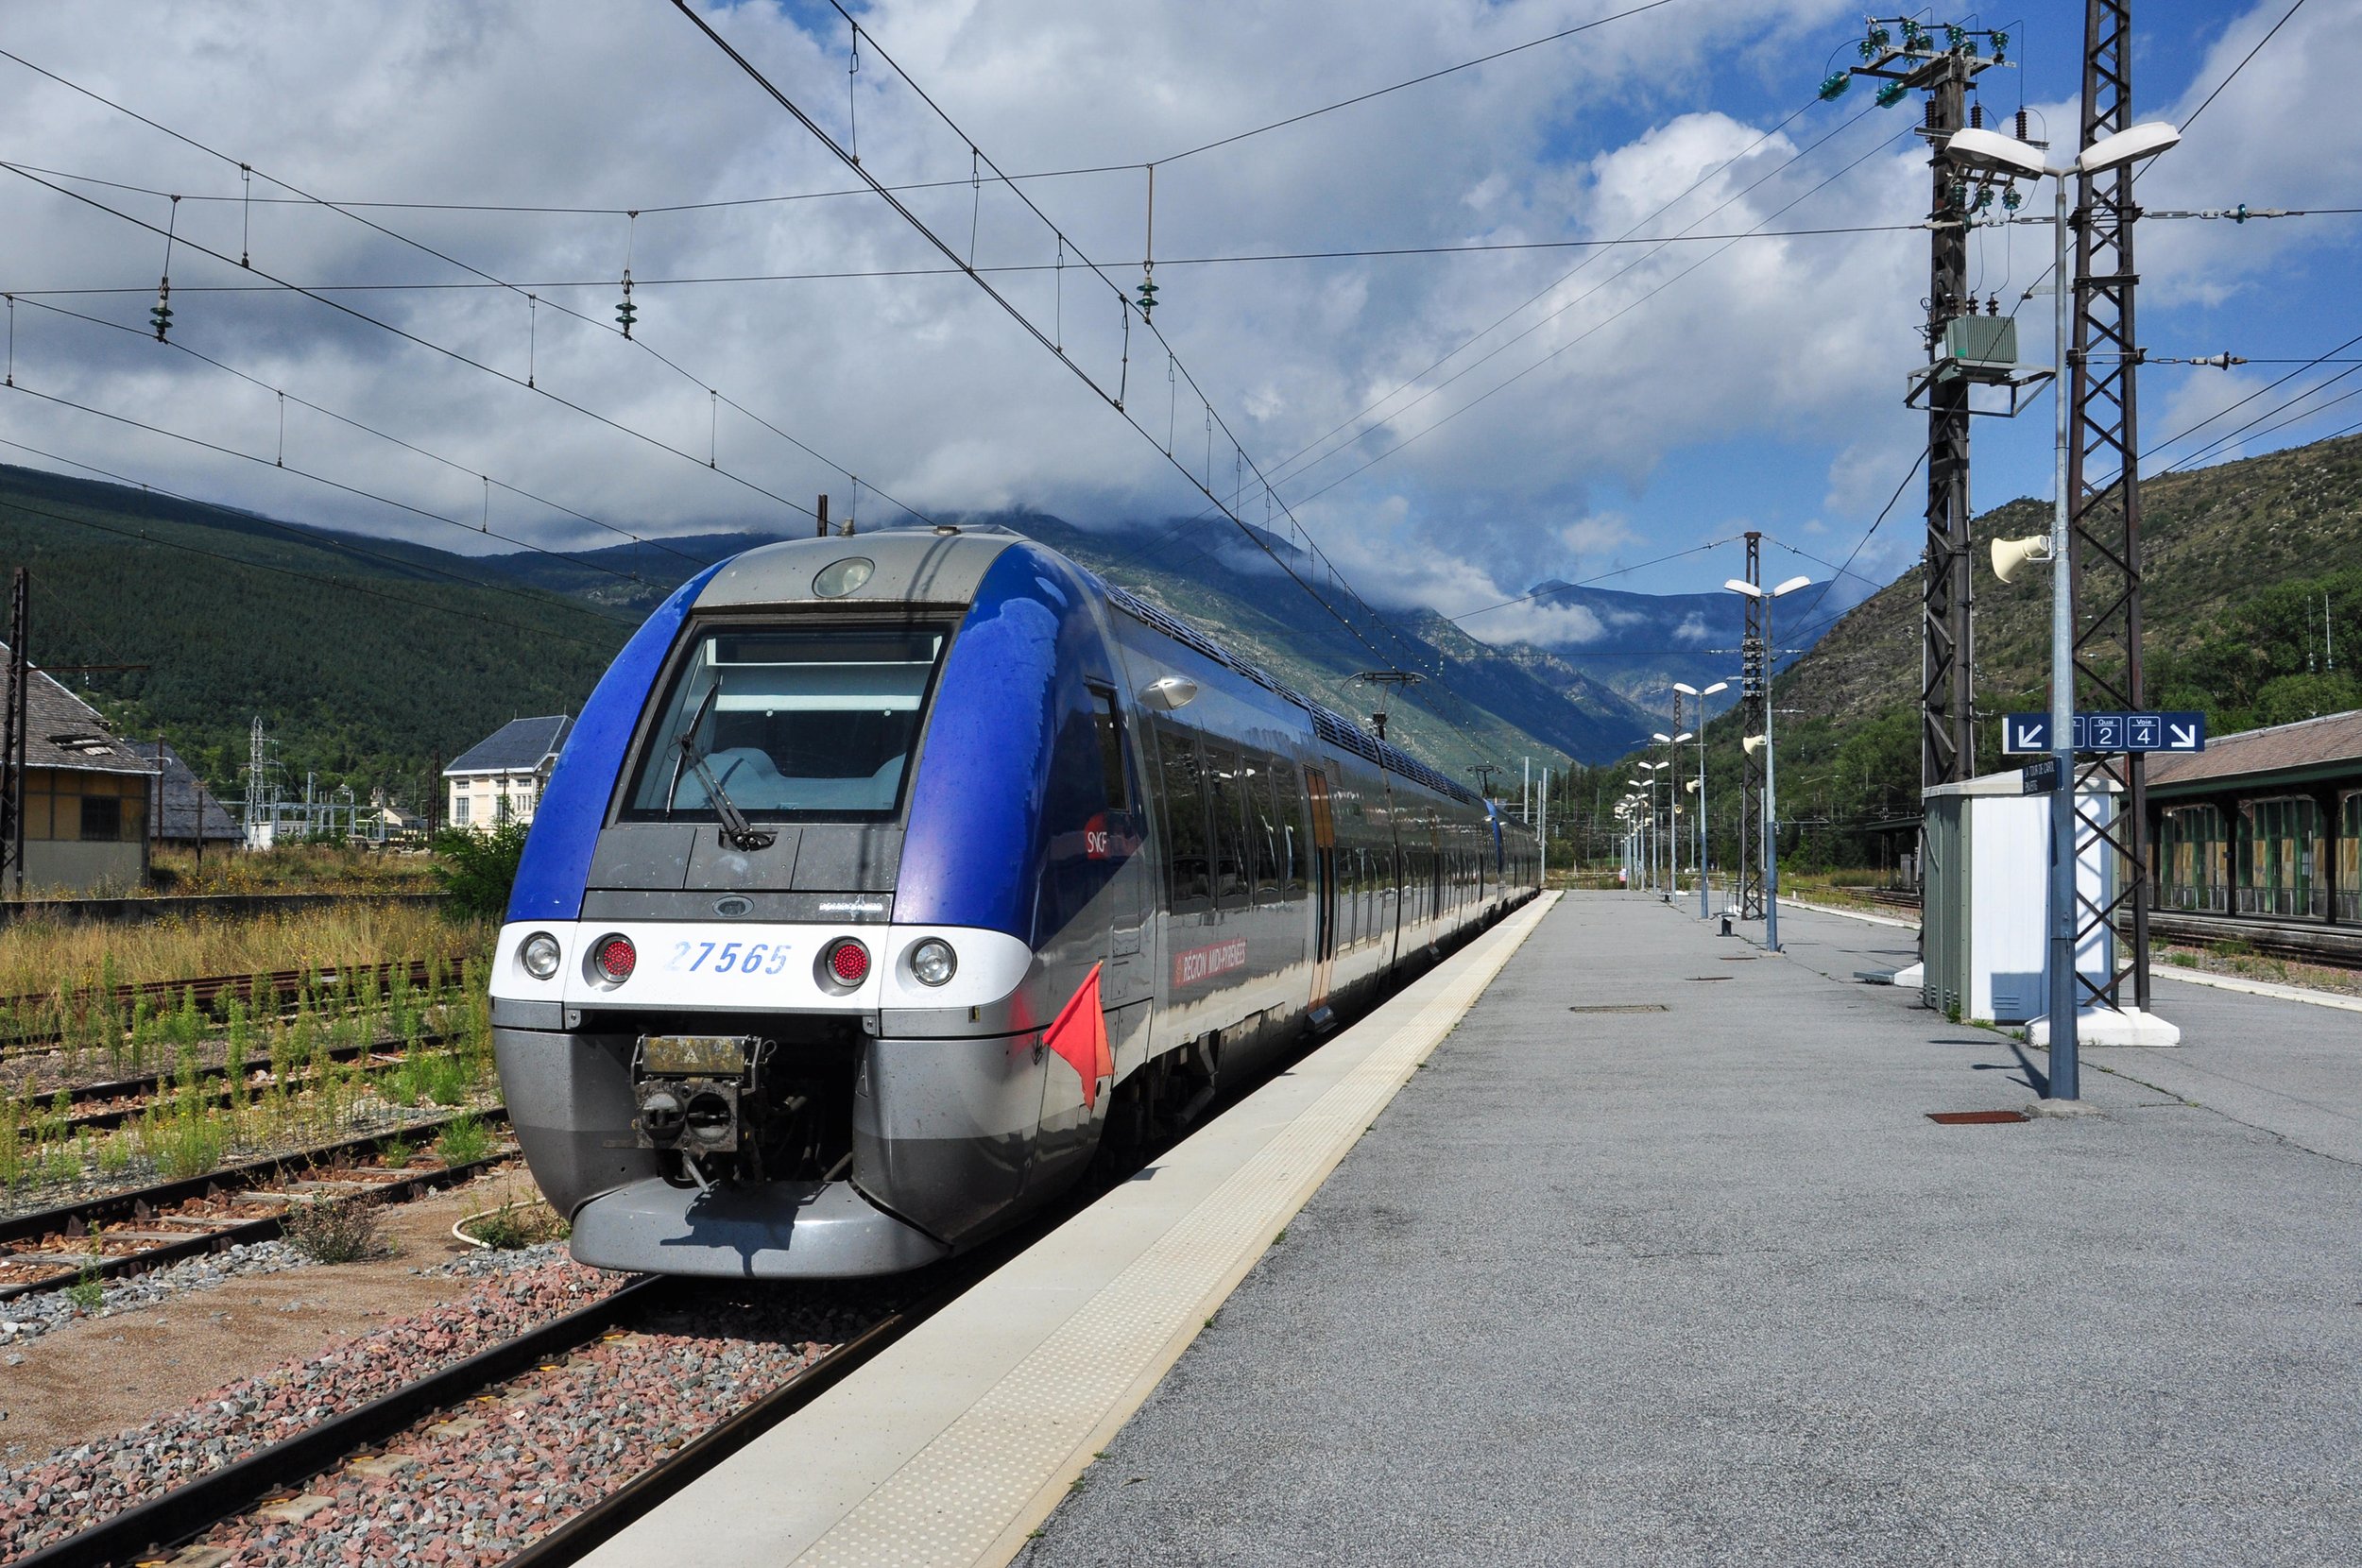 train travel through France